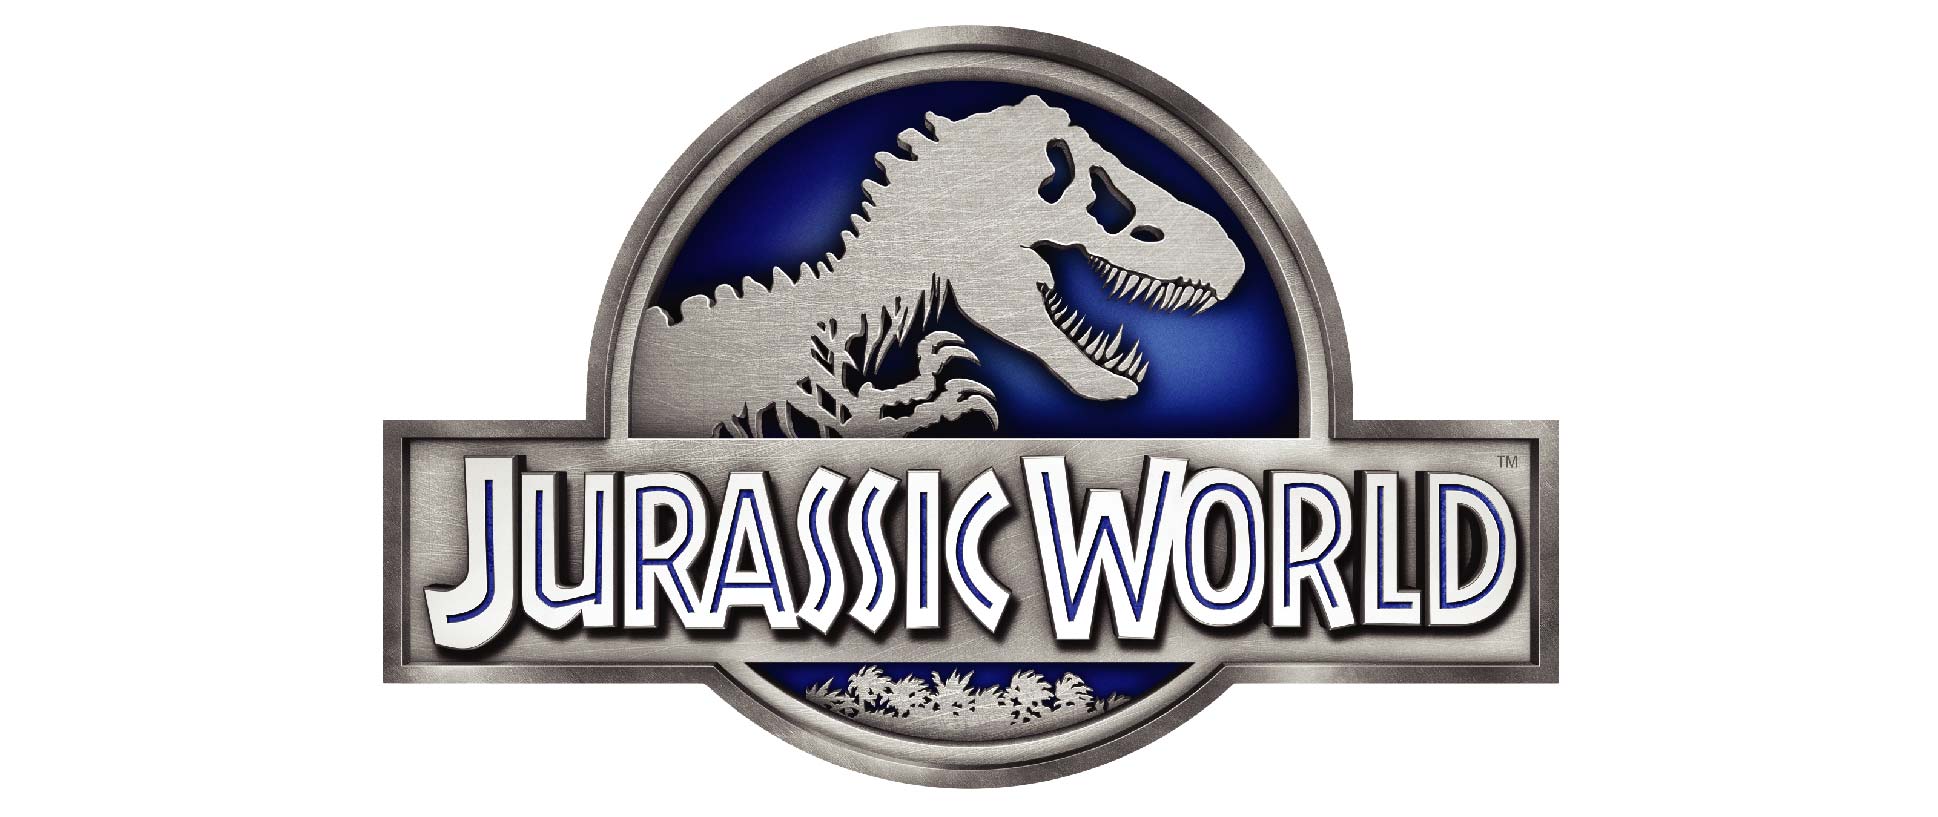 The Jurassic World logo.